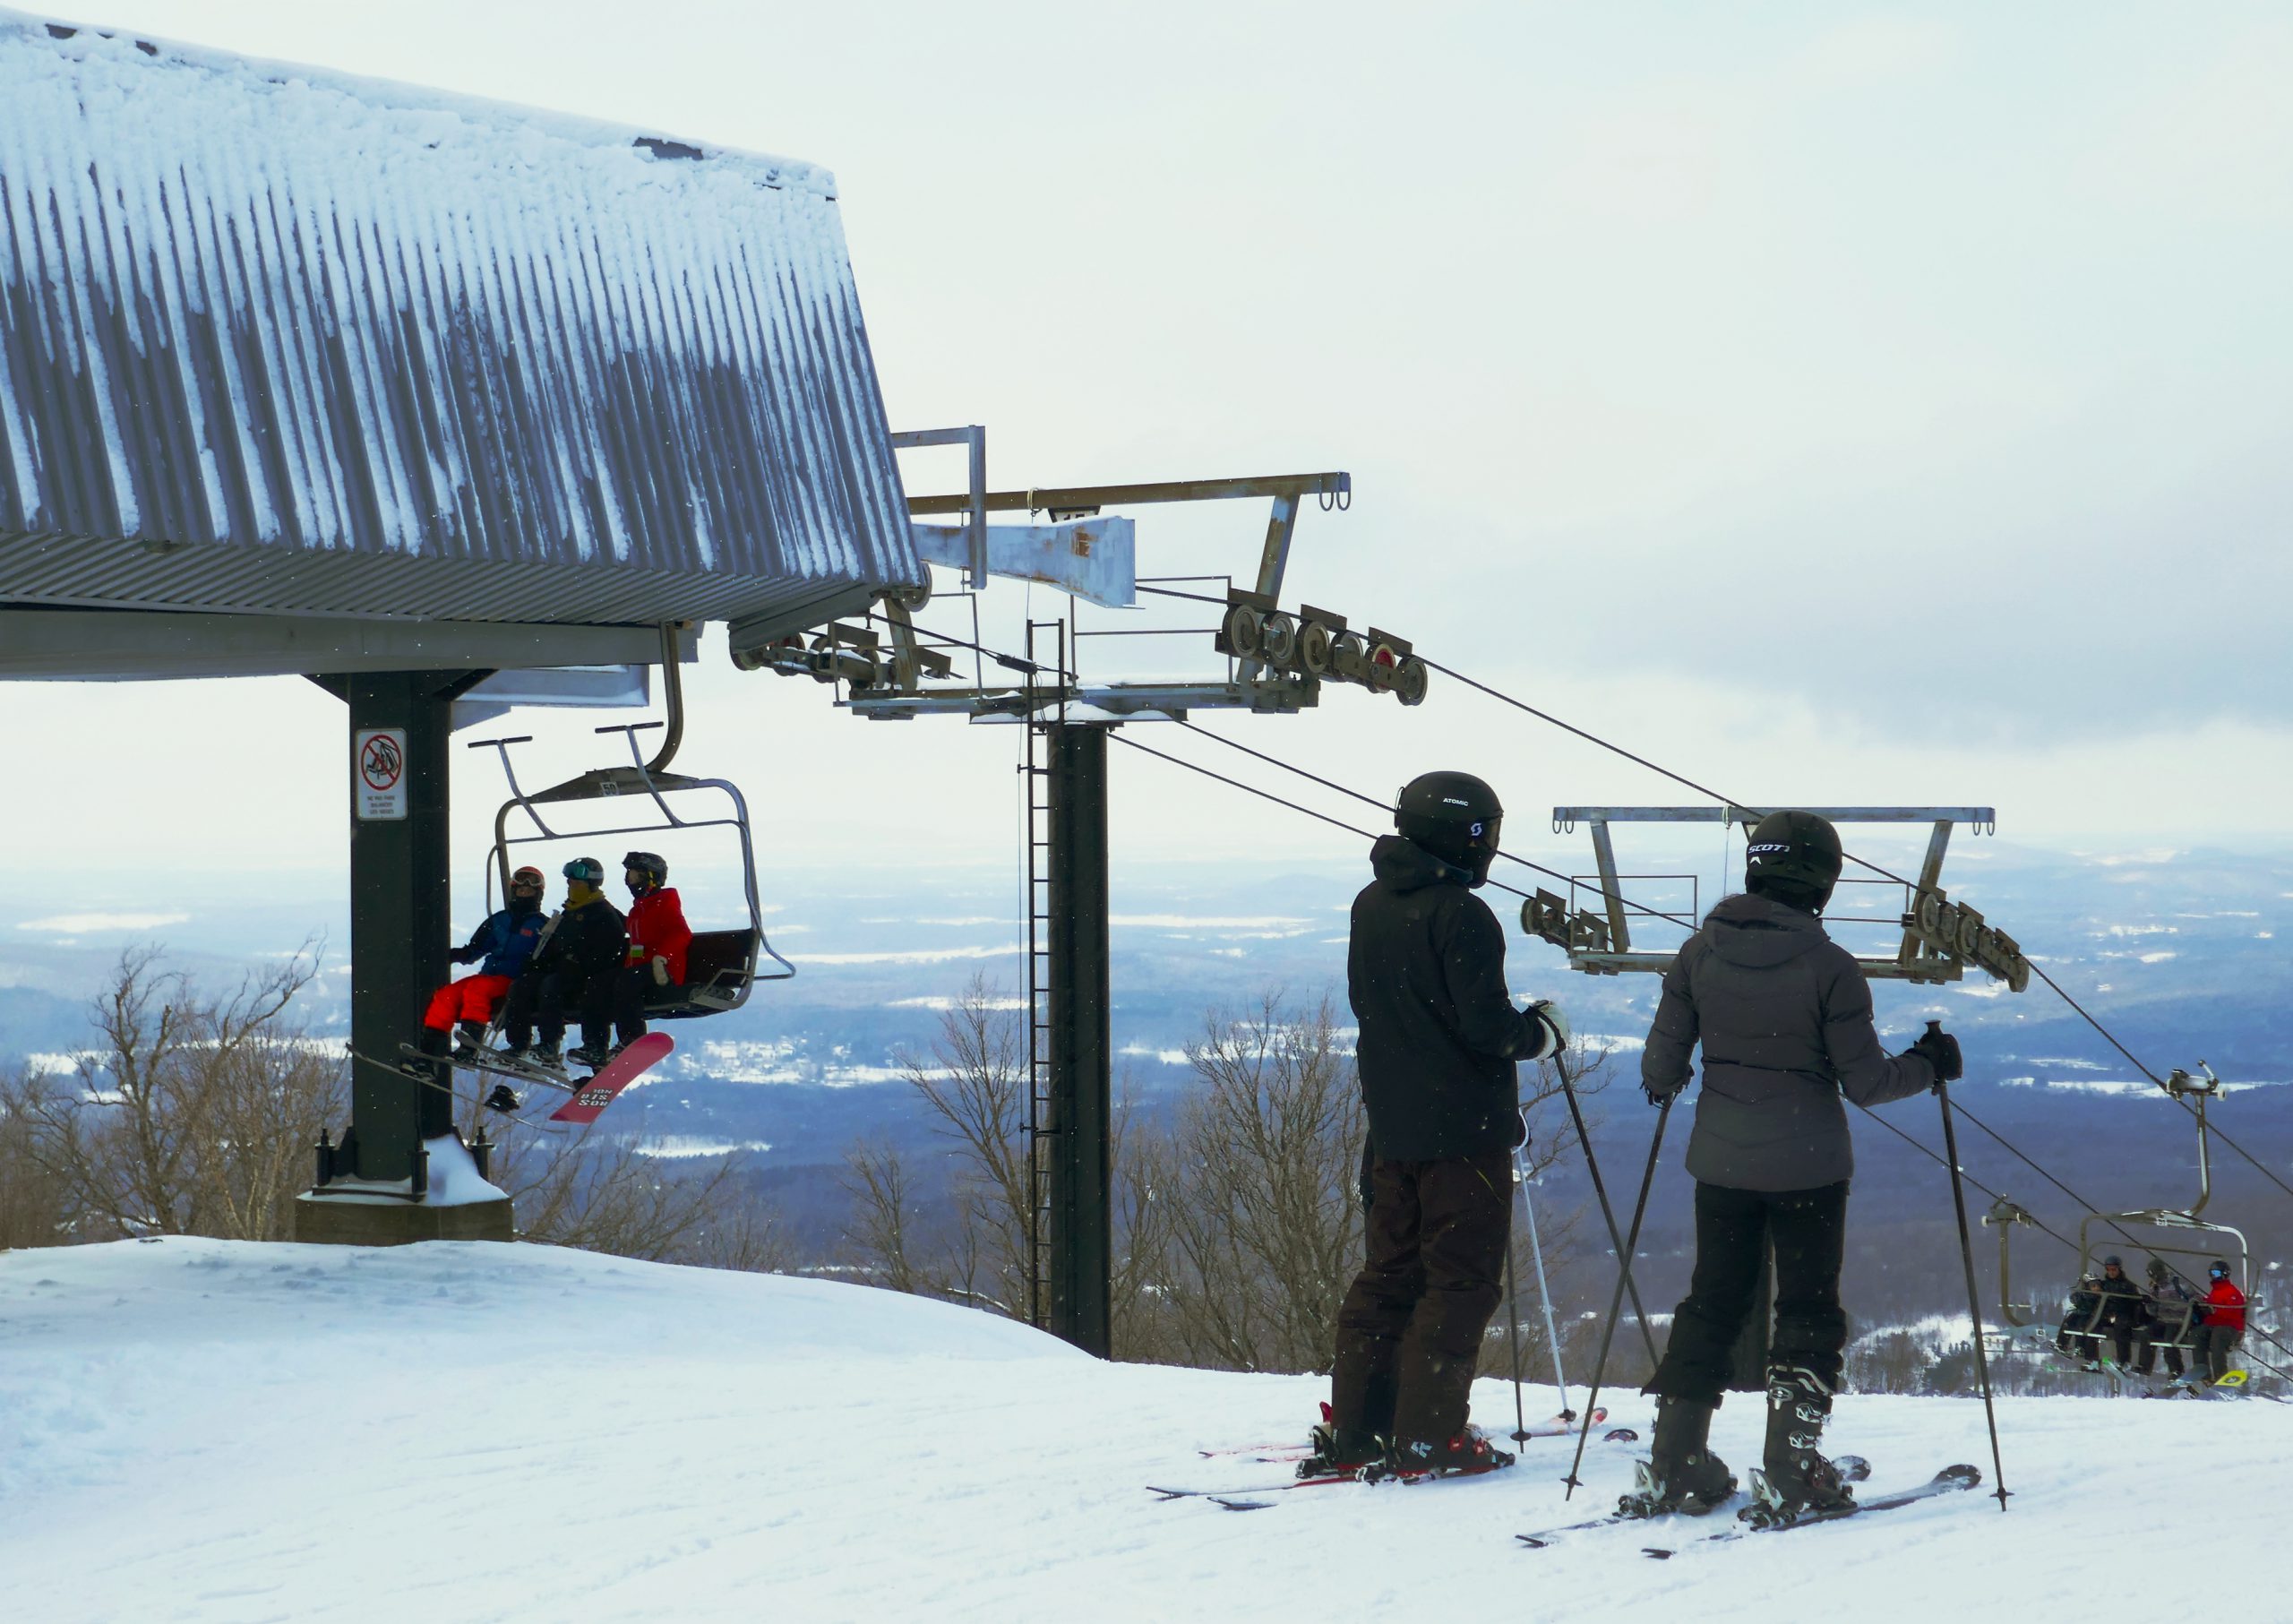 Skiers using a ski lift.